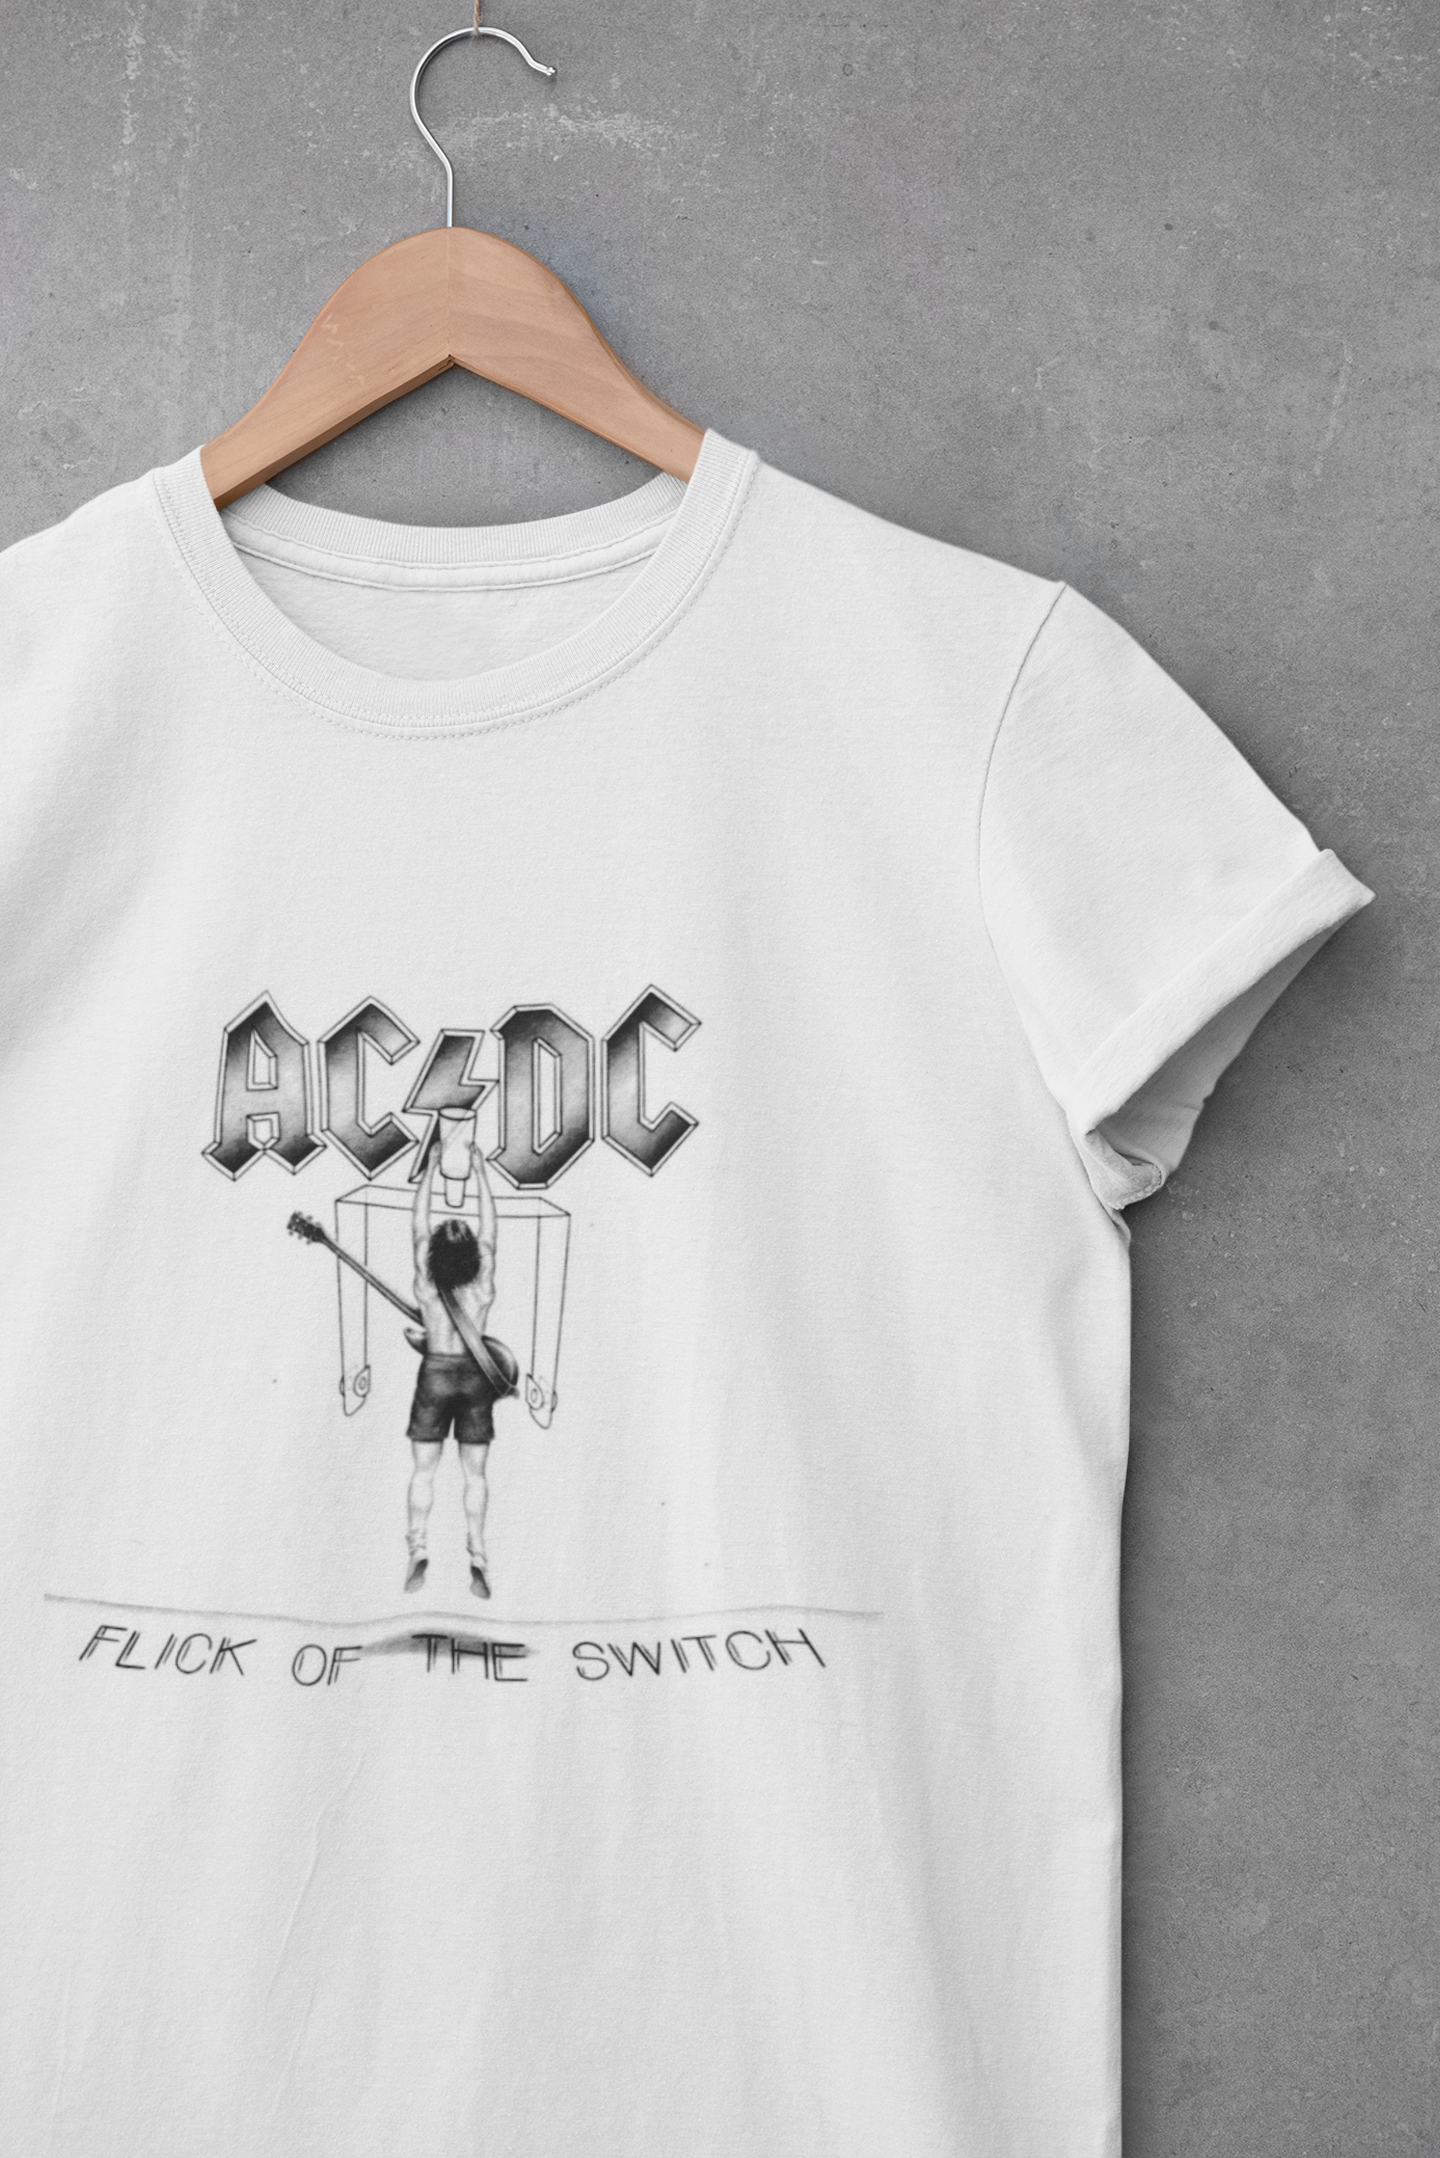 Camiseta "Flick of the Switch - ACDC" - Álbum - Música